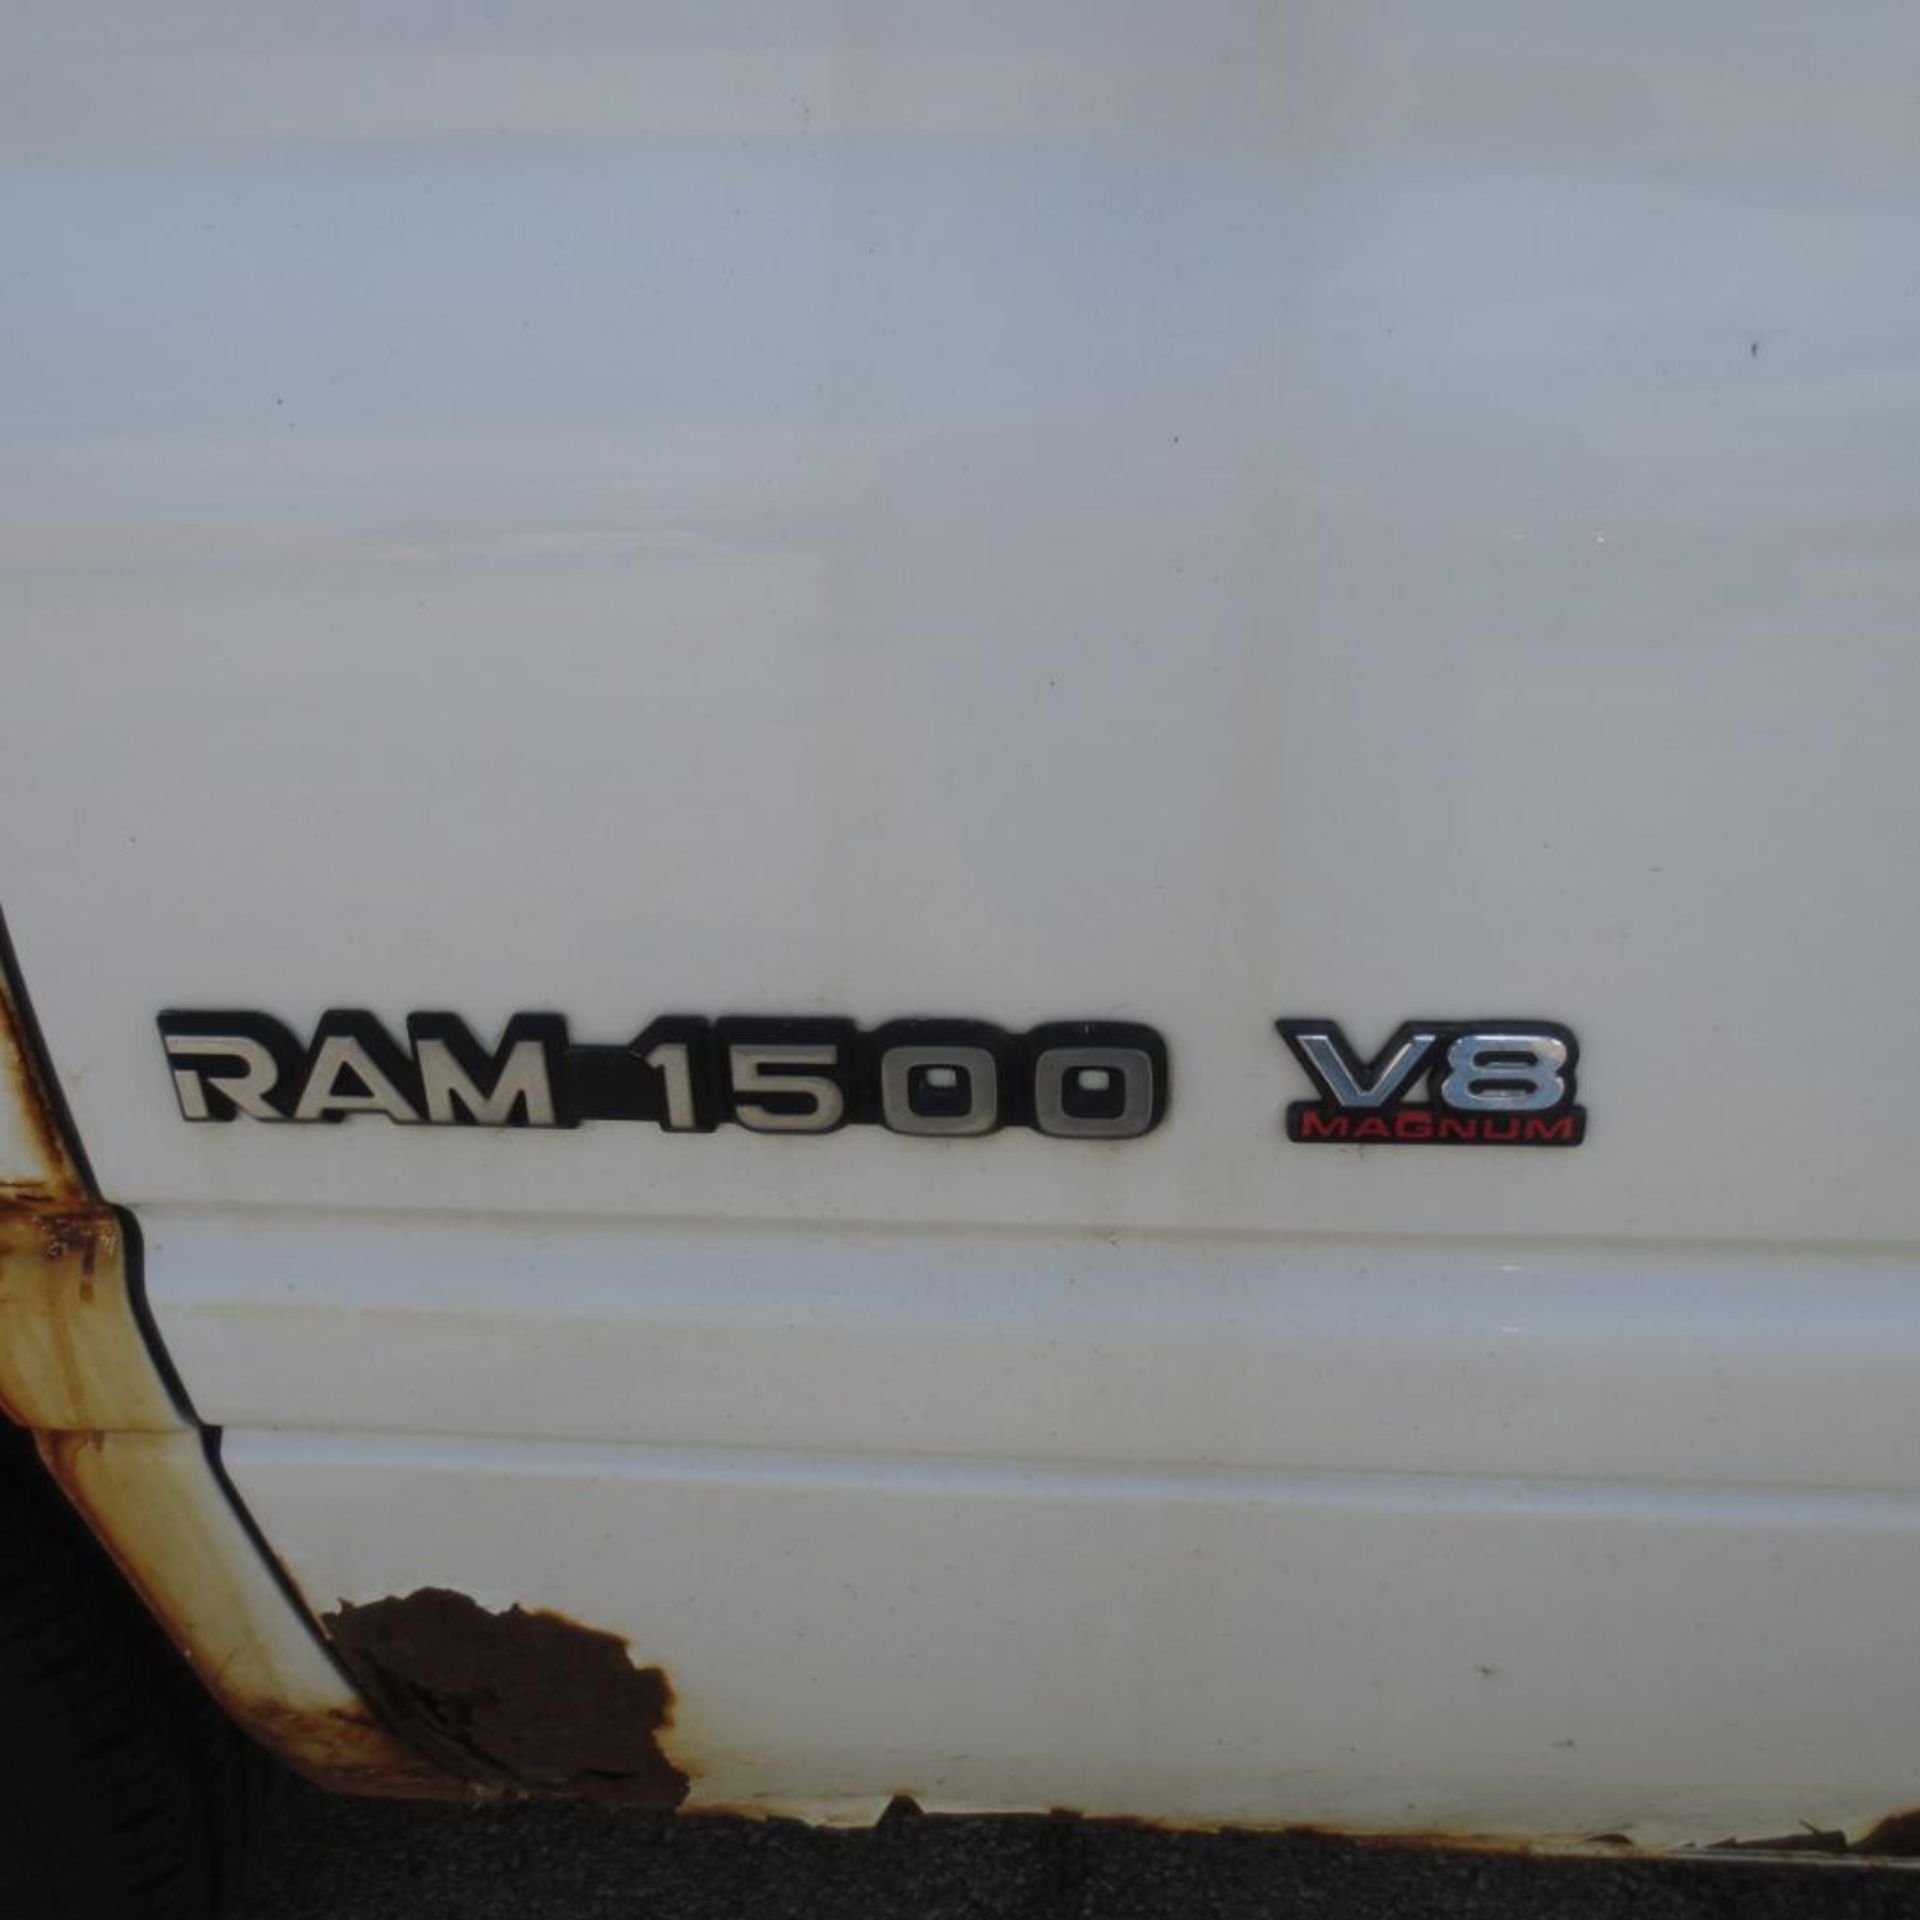 Dodge Ram 1500 Standard Cab Pickup Truck Vin: 1B7HC16Y0WS744787 (1998), 5.2L V-8, A/T, 124,739 Miles - Image 15 of 29